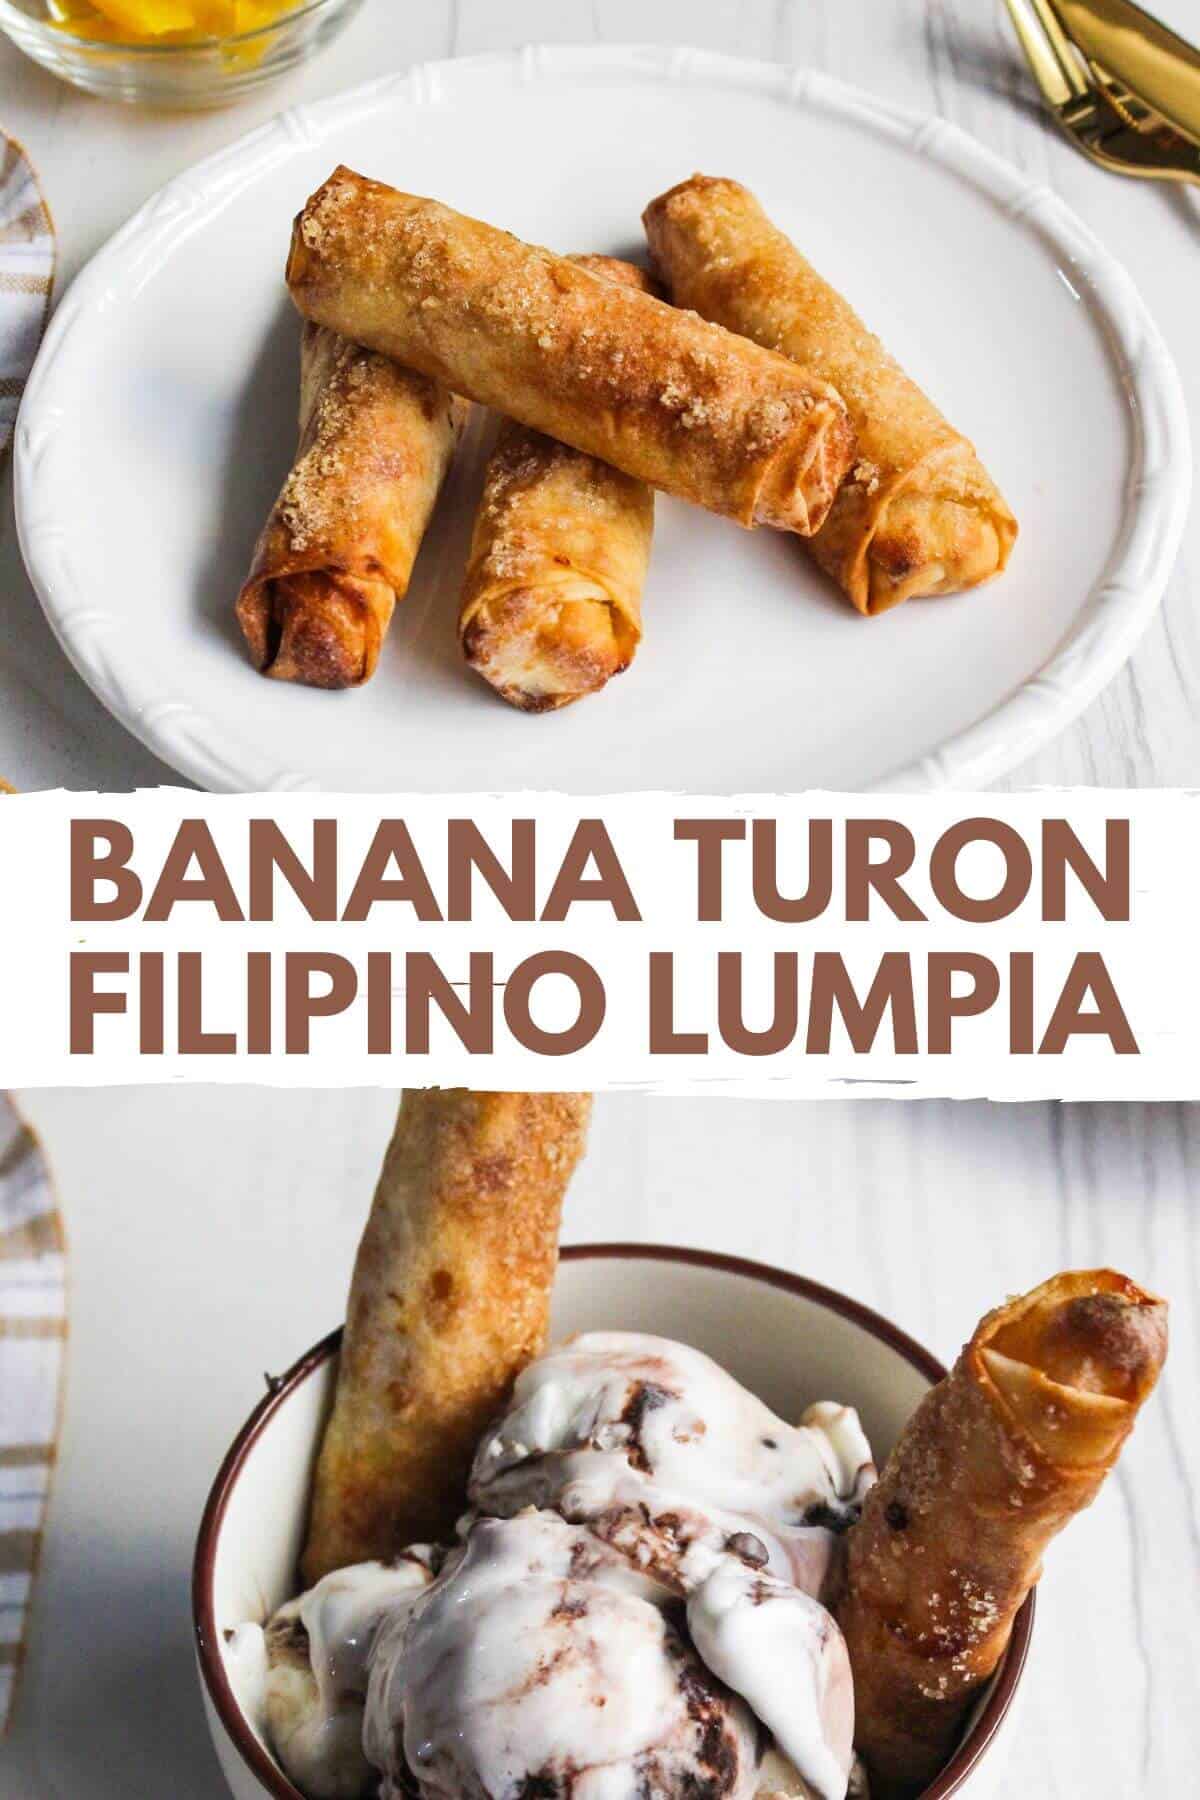 Banana turon Philippine egg roll with ice cream and ice cream.